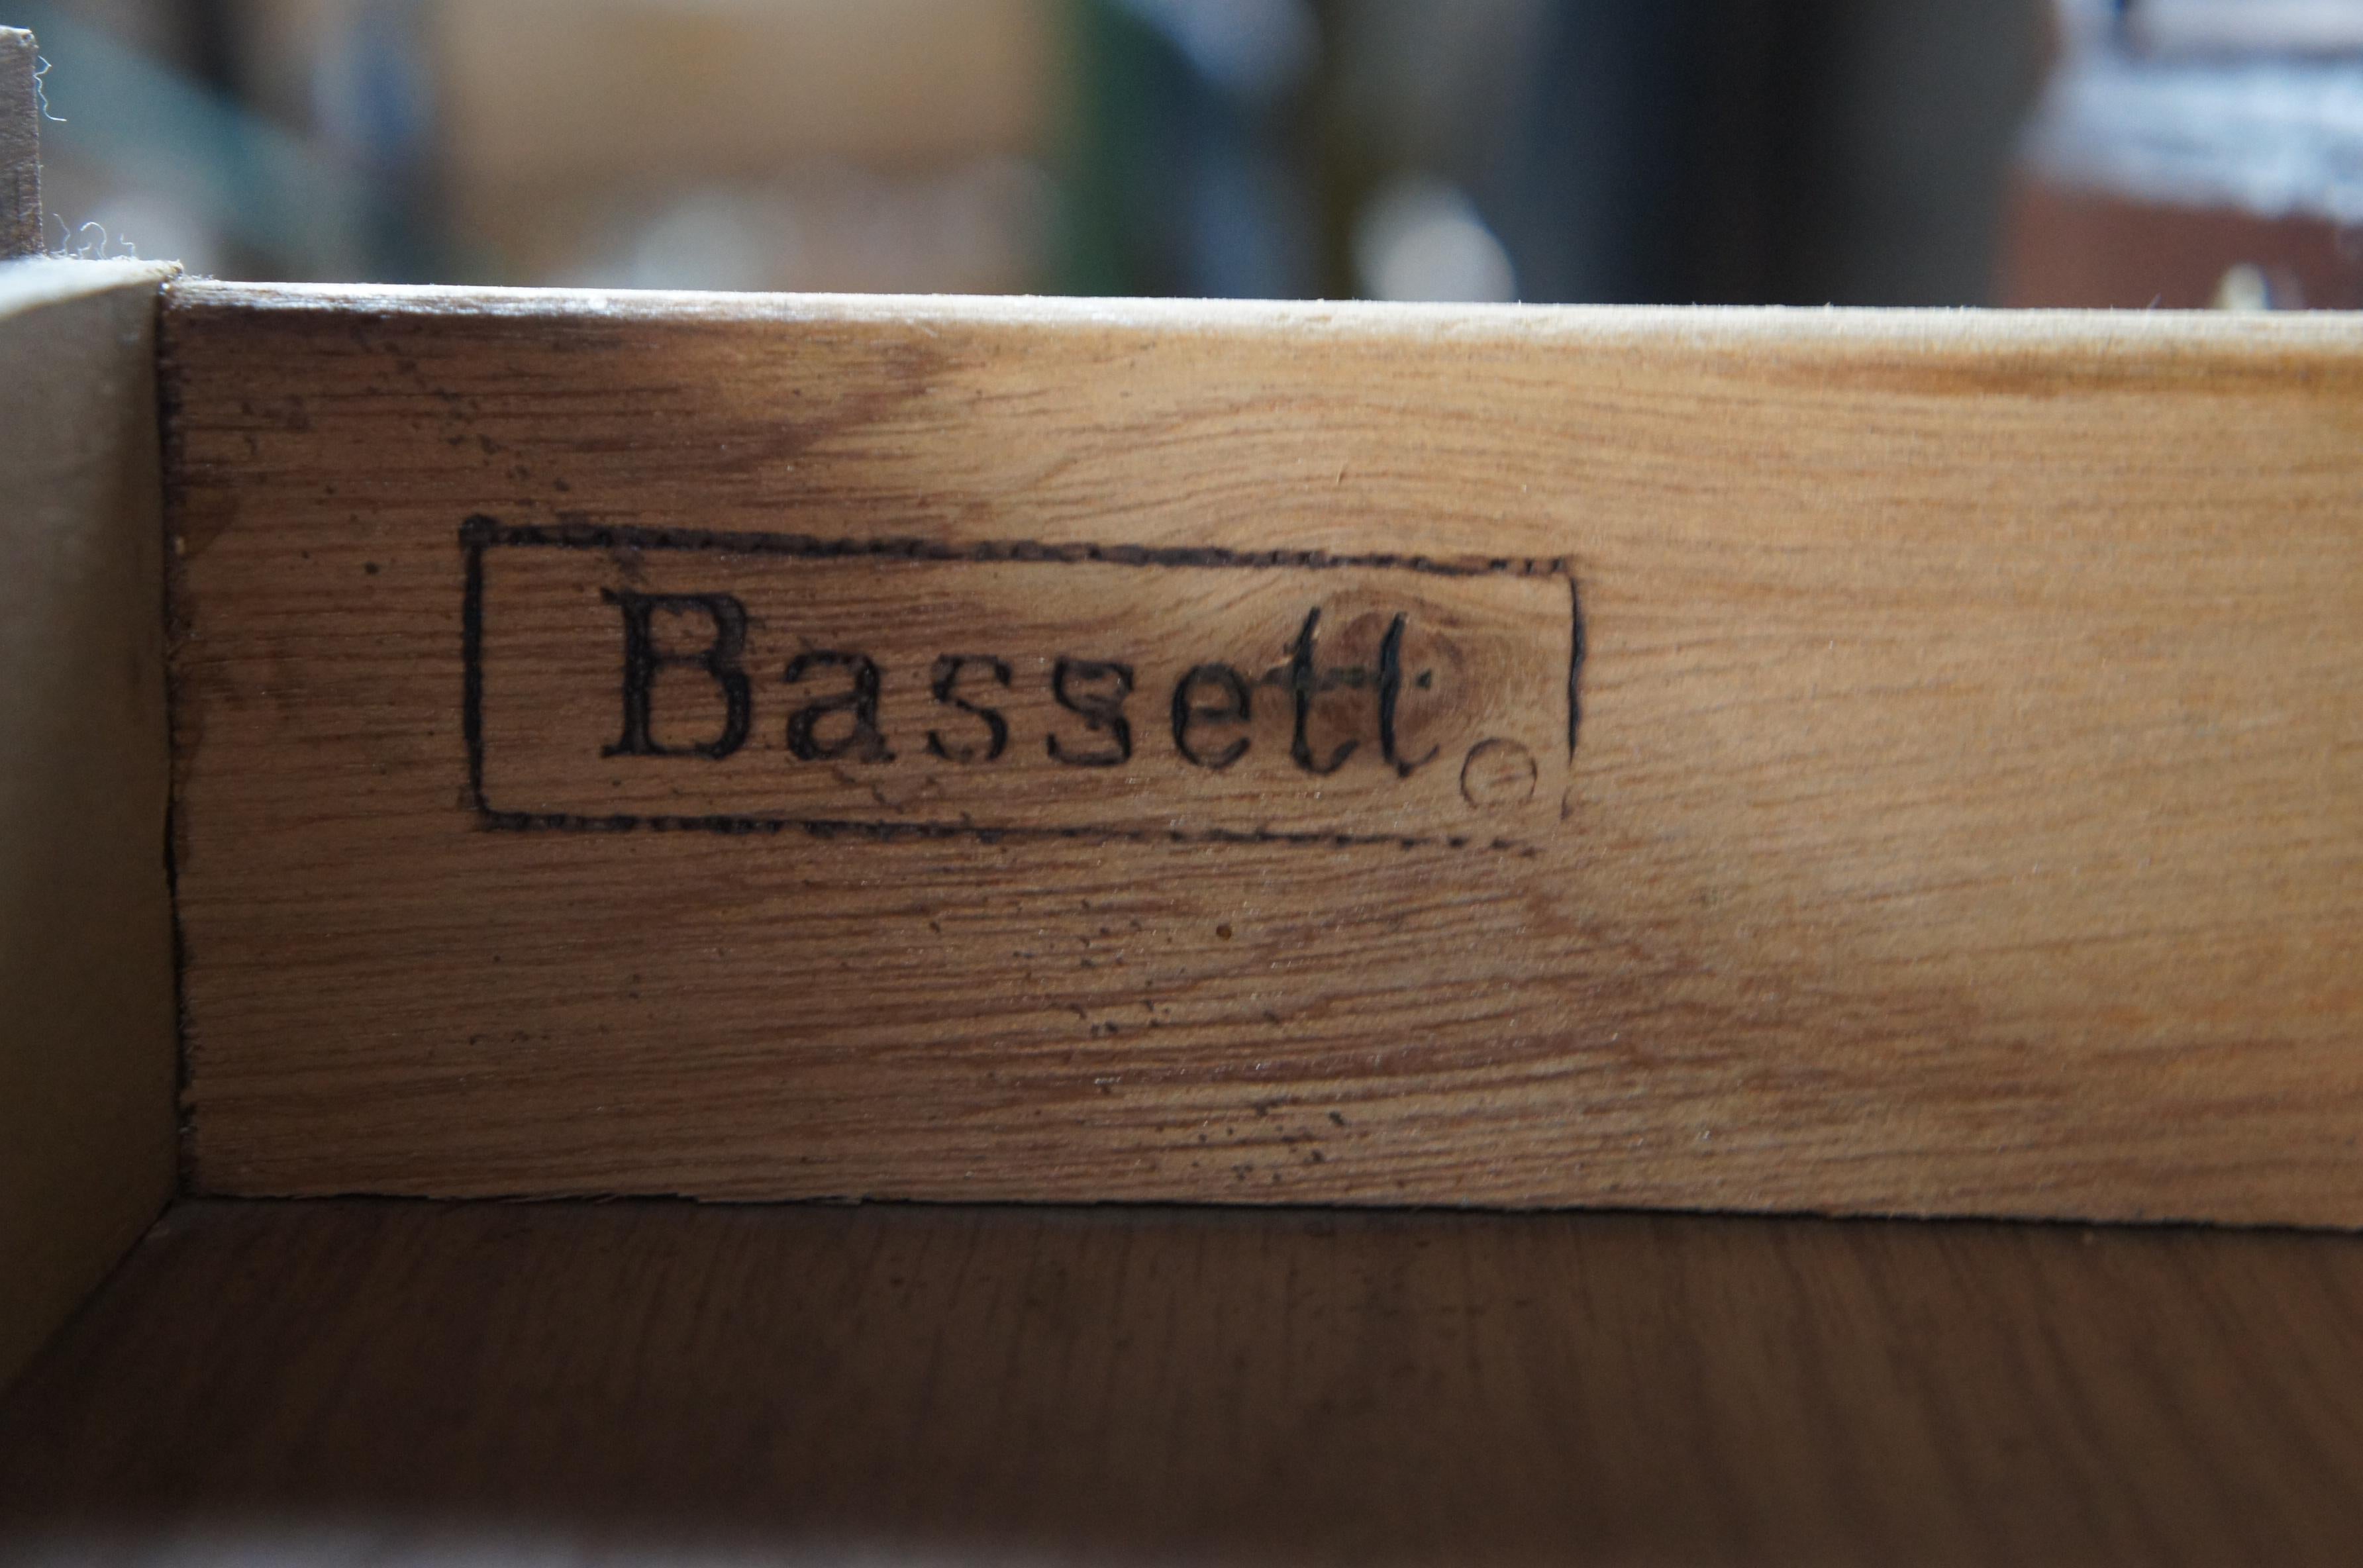 Bassett Cherry Queen Anne 2 Tier Serpentine Sideboard Console Sofa Hall Table 